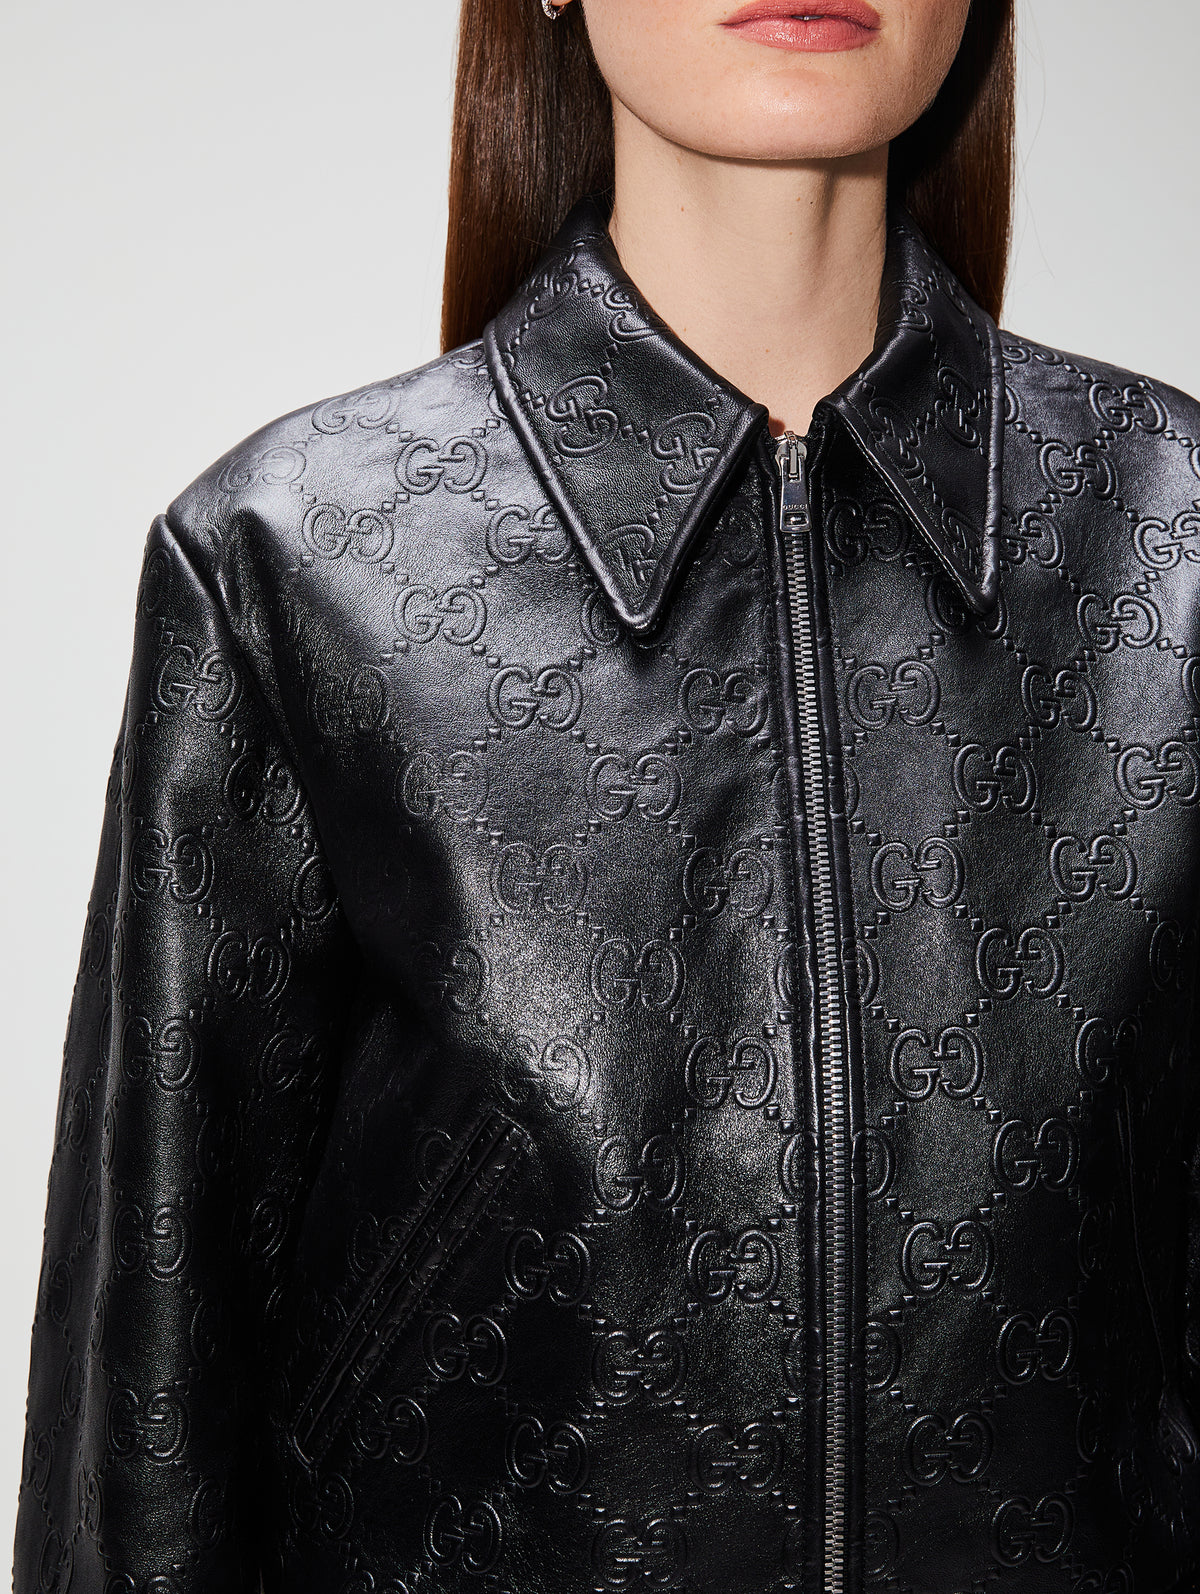 Gucci Embossed GG Leather Bomber Jacket, It 36 | Elysewalker